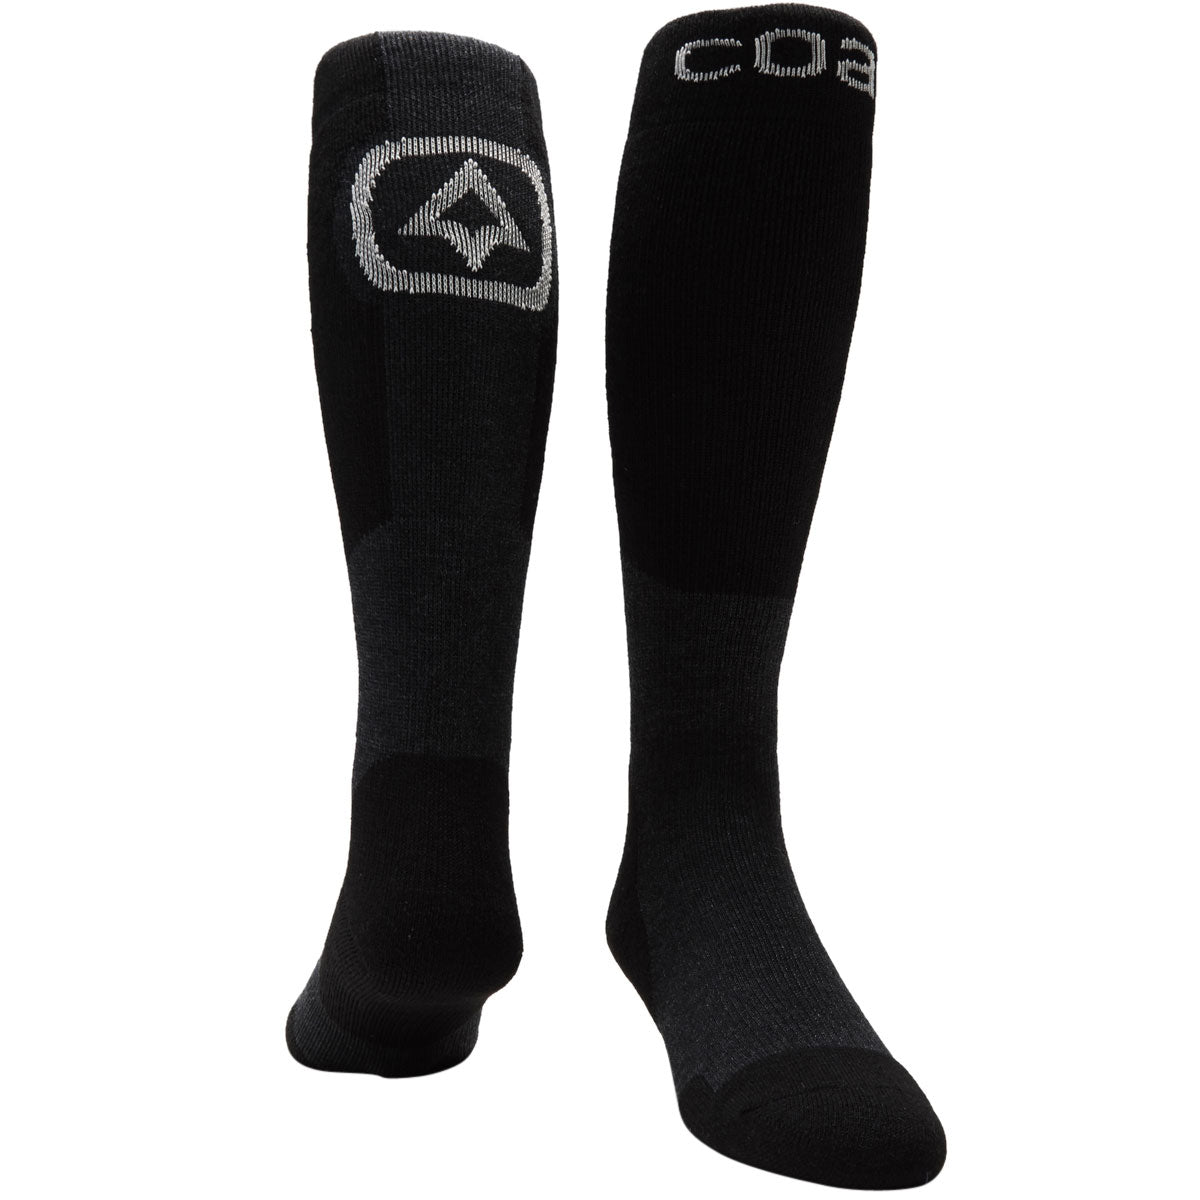 Coal Lightweight Snowboard Socks - Black image 2